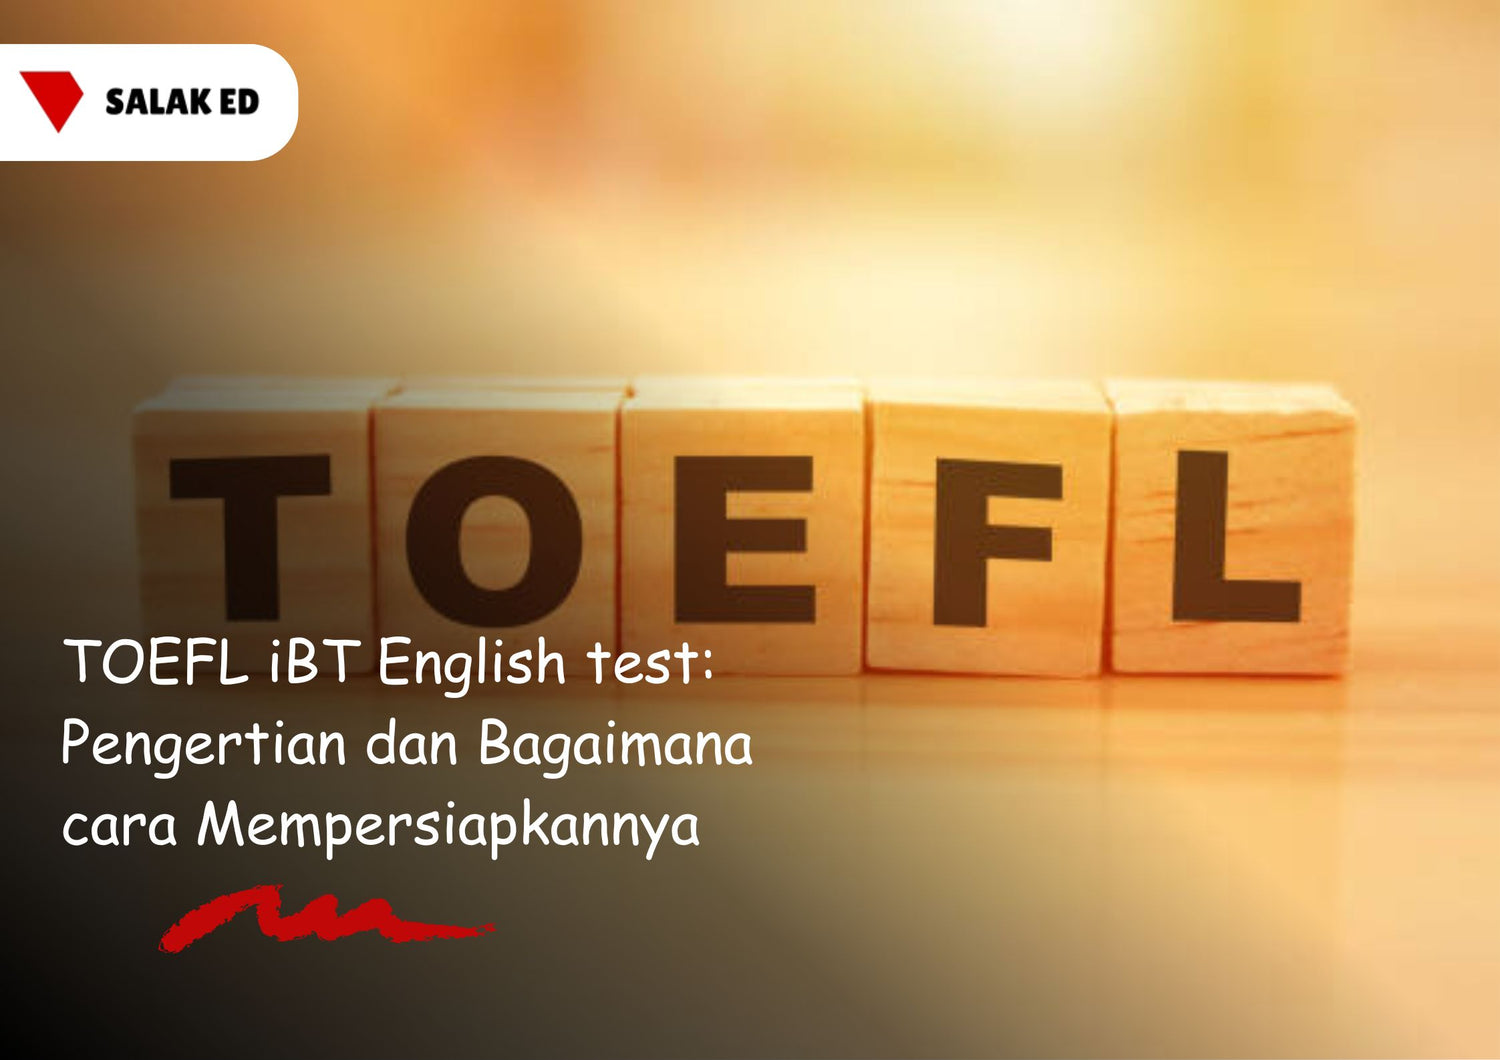 TOEFL iBT English test: Pengertian dan Bagaimana cara Mempersiapkannya